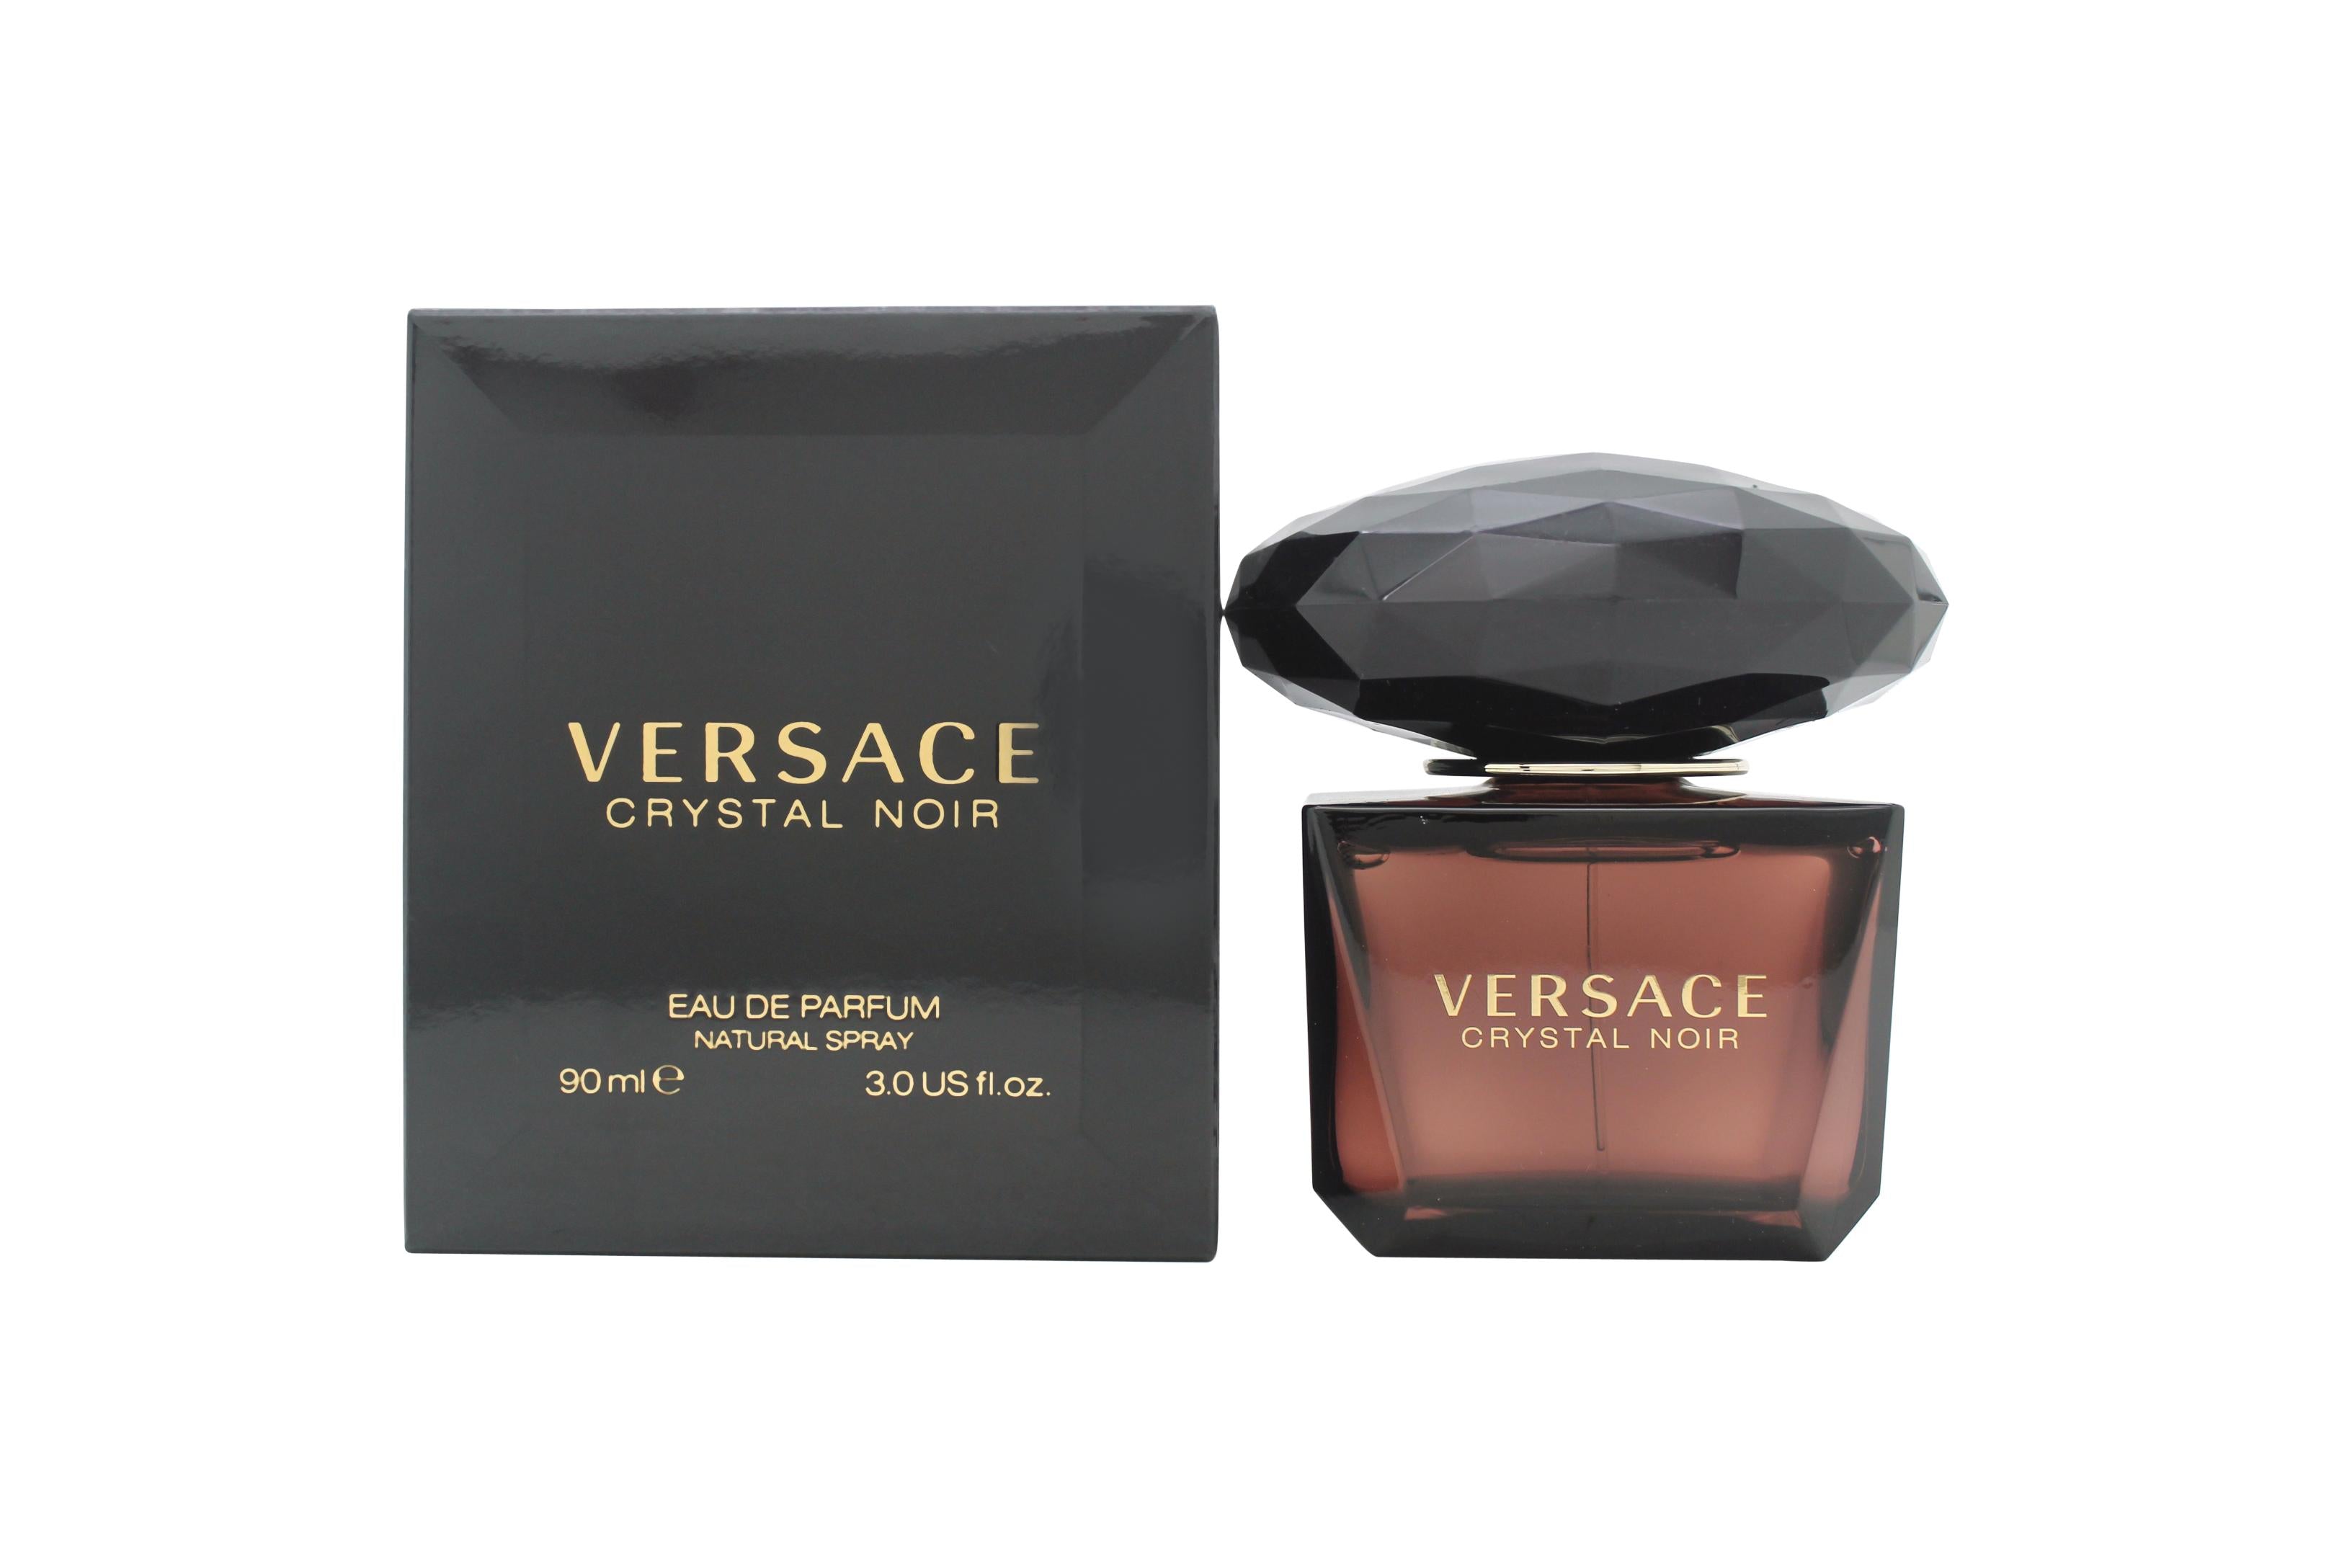 View Versace Crystal Noir Eau de Parfum 90ml Spray information